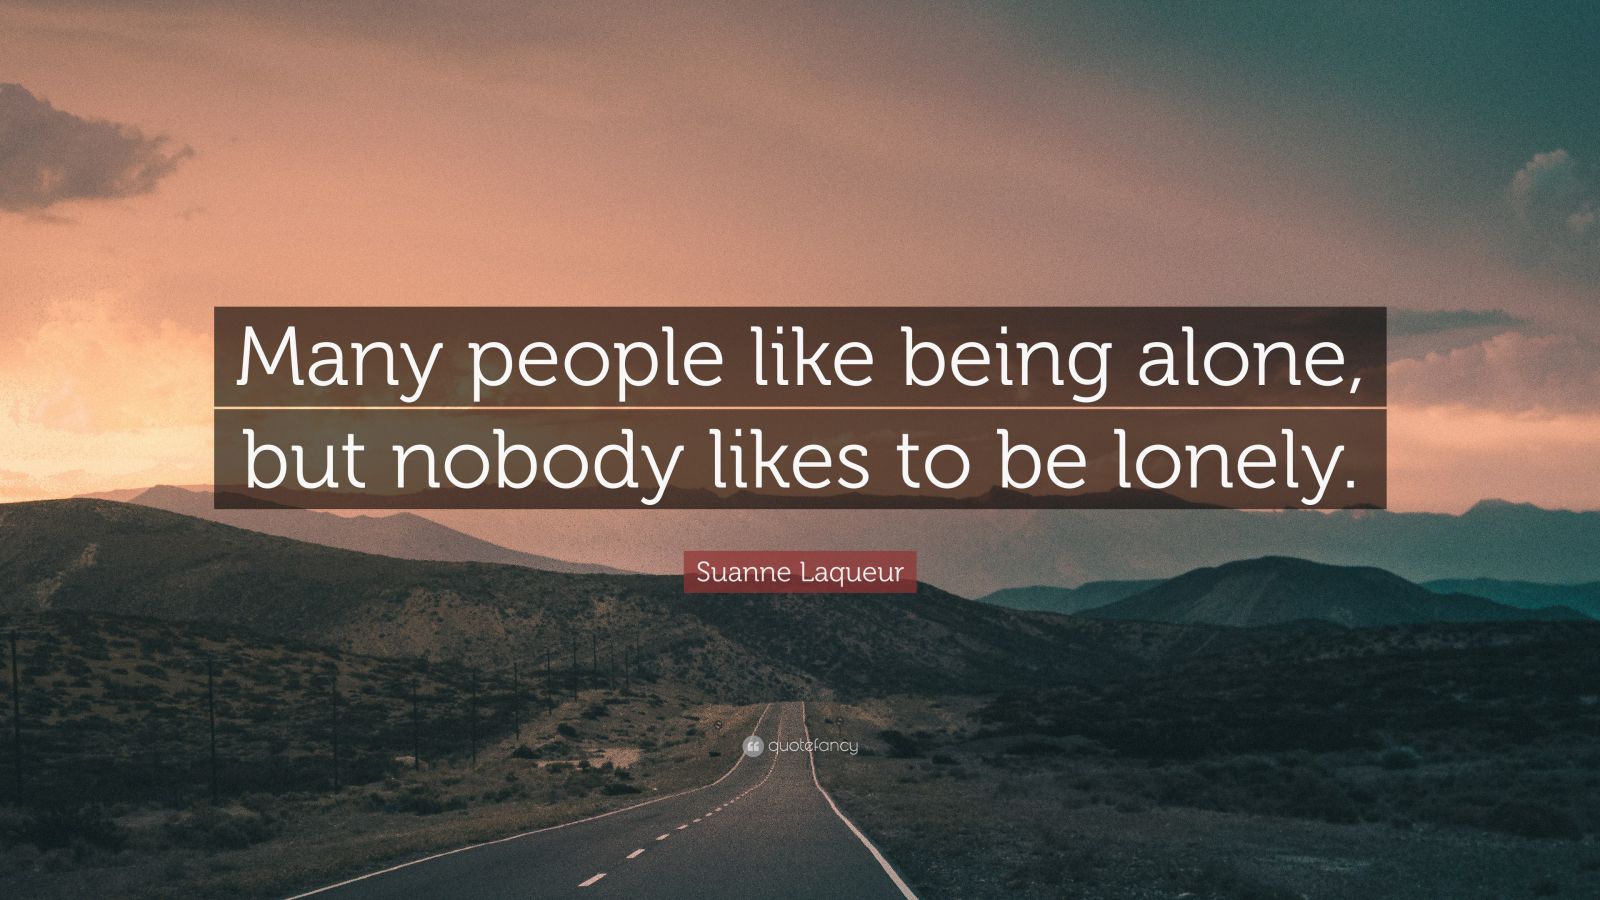 Linger - Nobody Makes It Alone